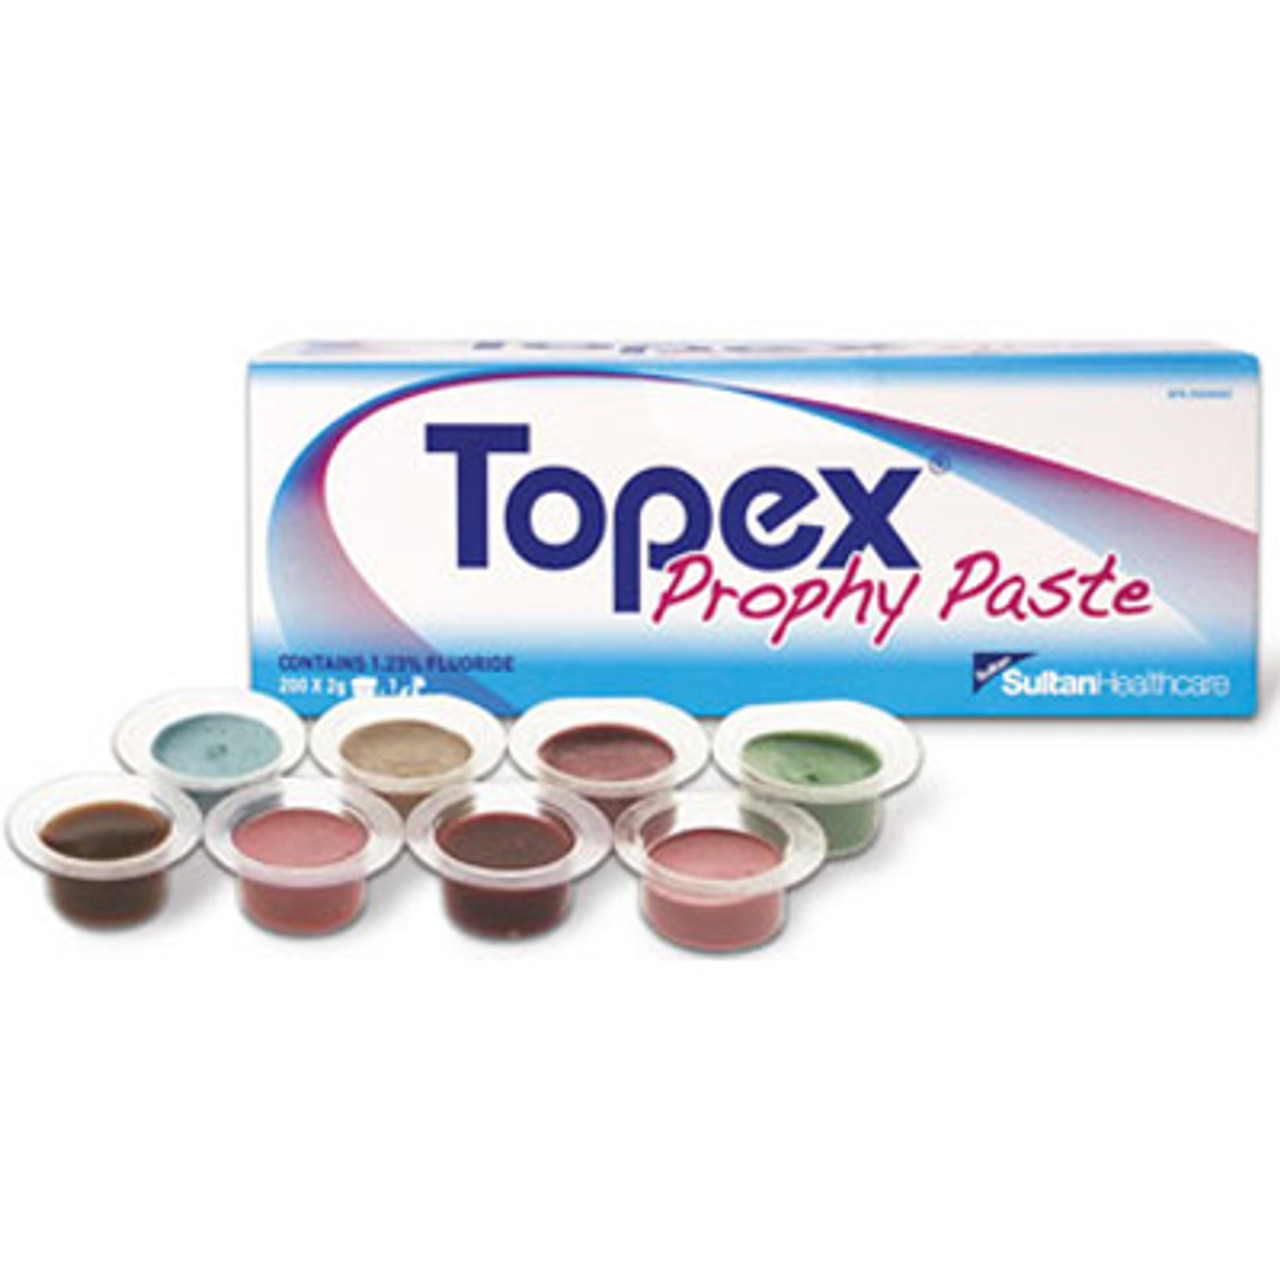 Sultan Topex Prophylaxis Paste Cups Neapolitan Assortment, Medium, 200 cups/bx